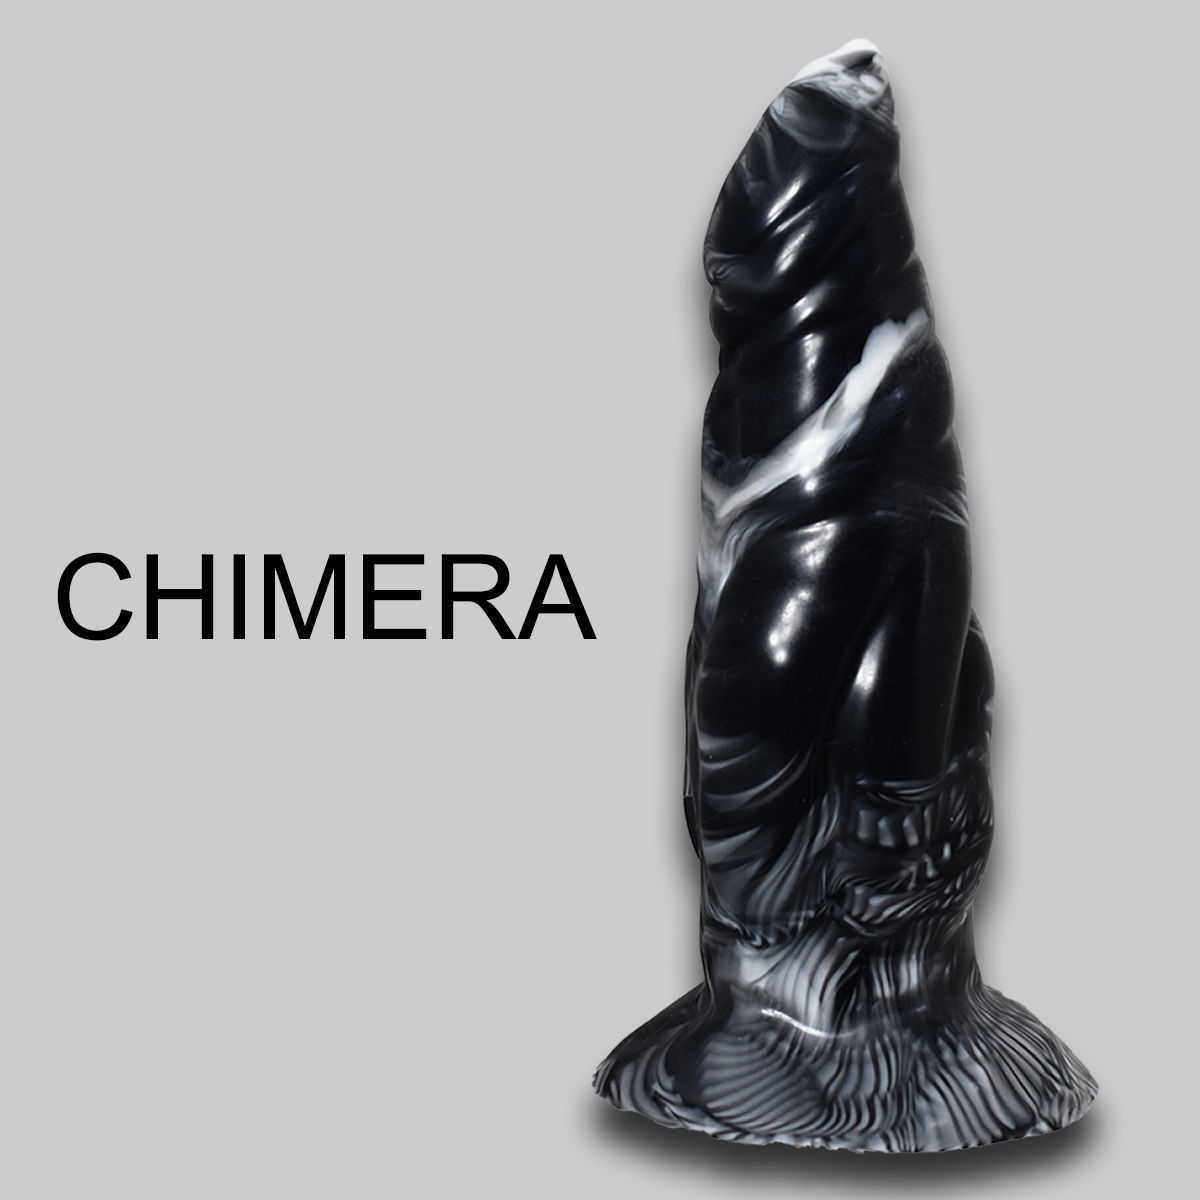 Chimera Dildo by Fantasy Dildos - 3 Sizes - Boink Adult Boutique www.boinkmuskoka.com